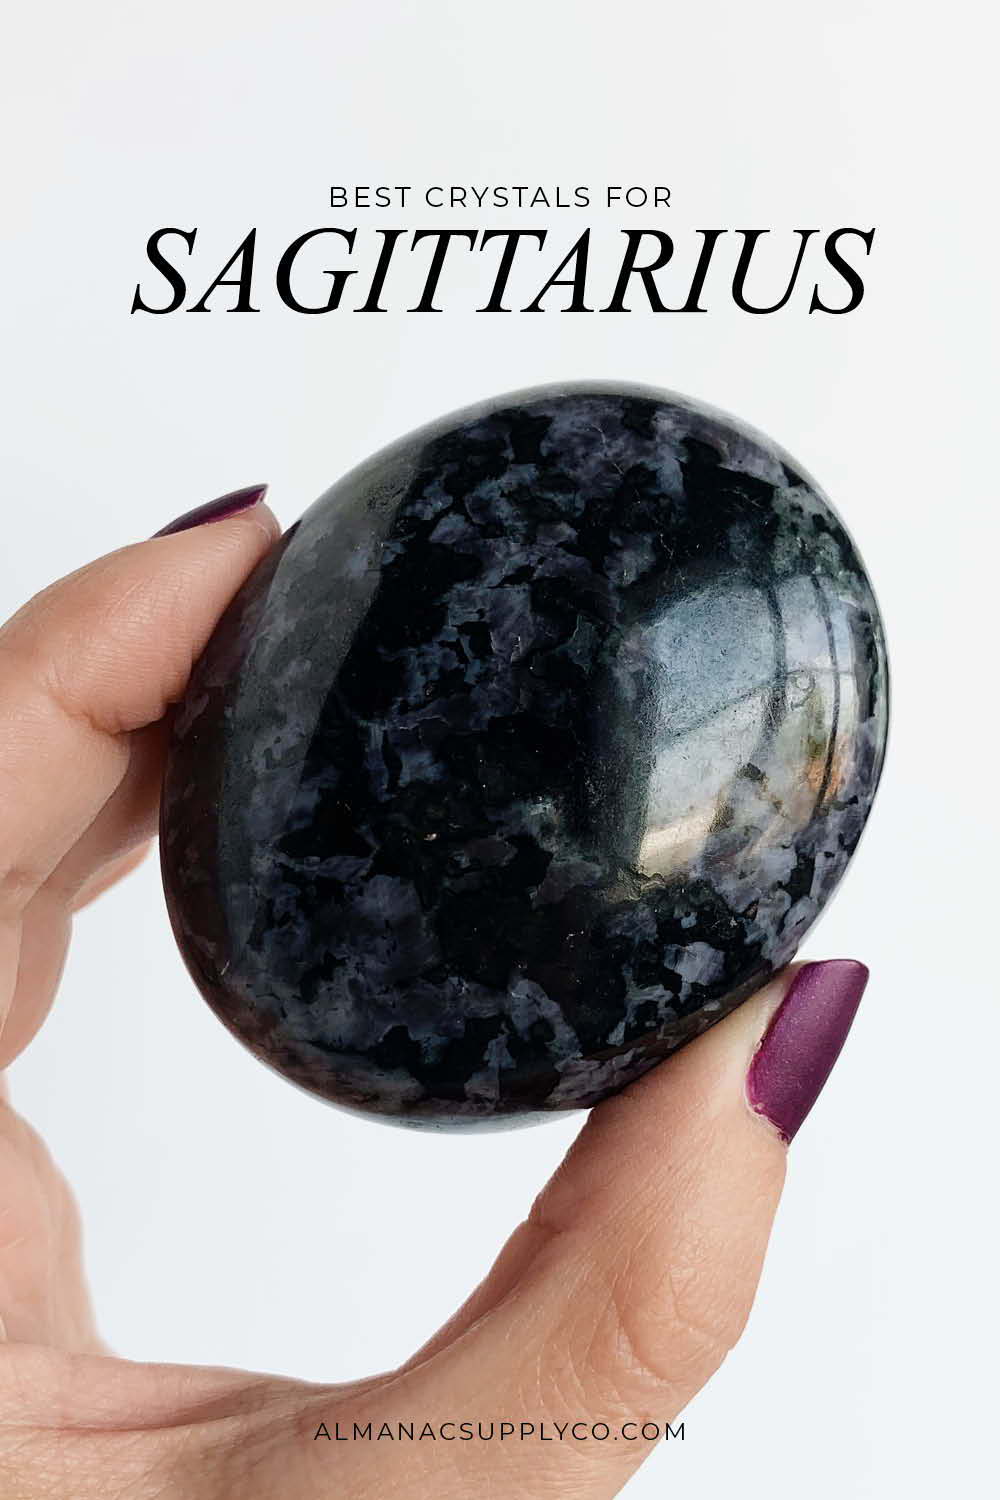 The Best Crystals for Sagittarius